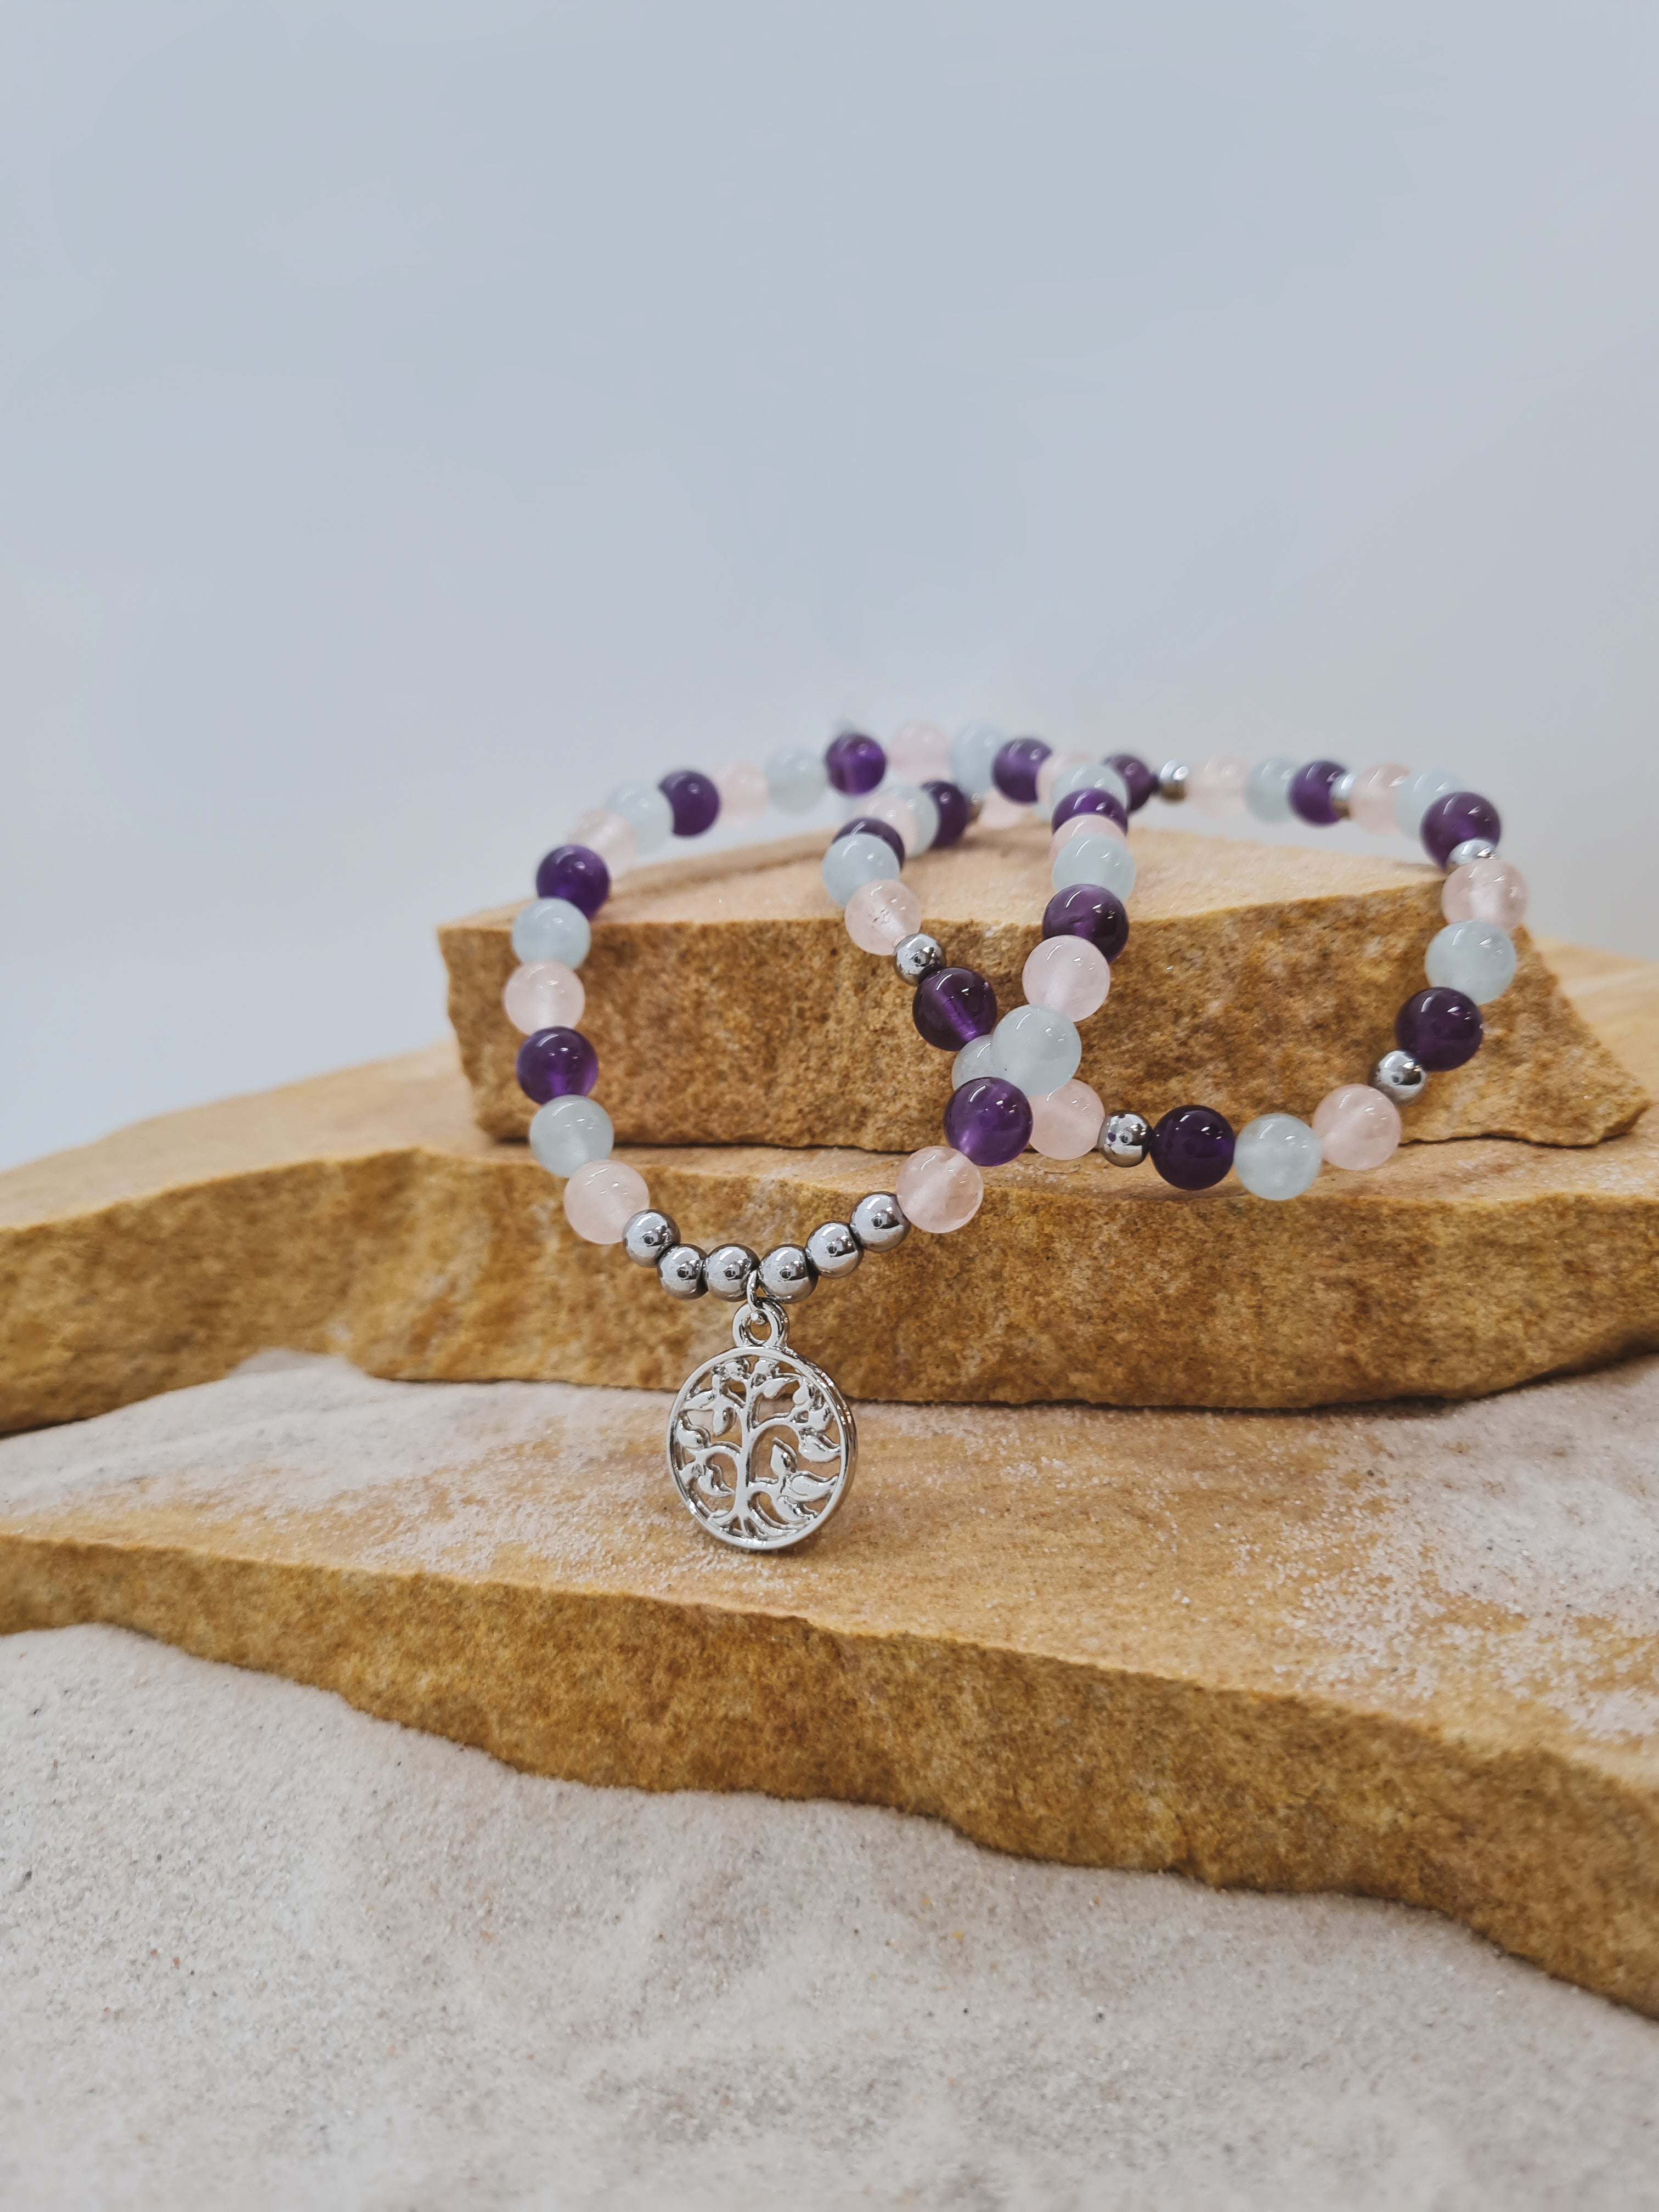 Harmony trilogy Aquamarine, amethyst and rose quartz 6mm crystal bead bracelet twin set with tree of life charm